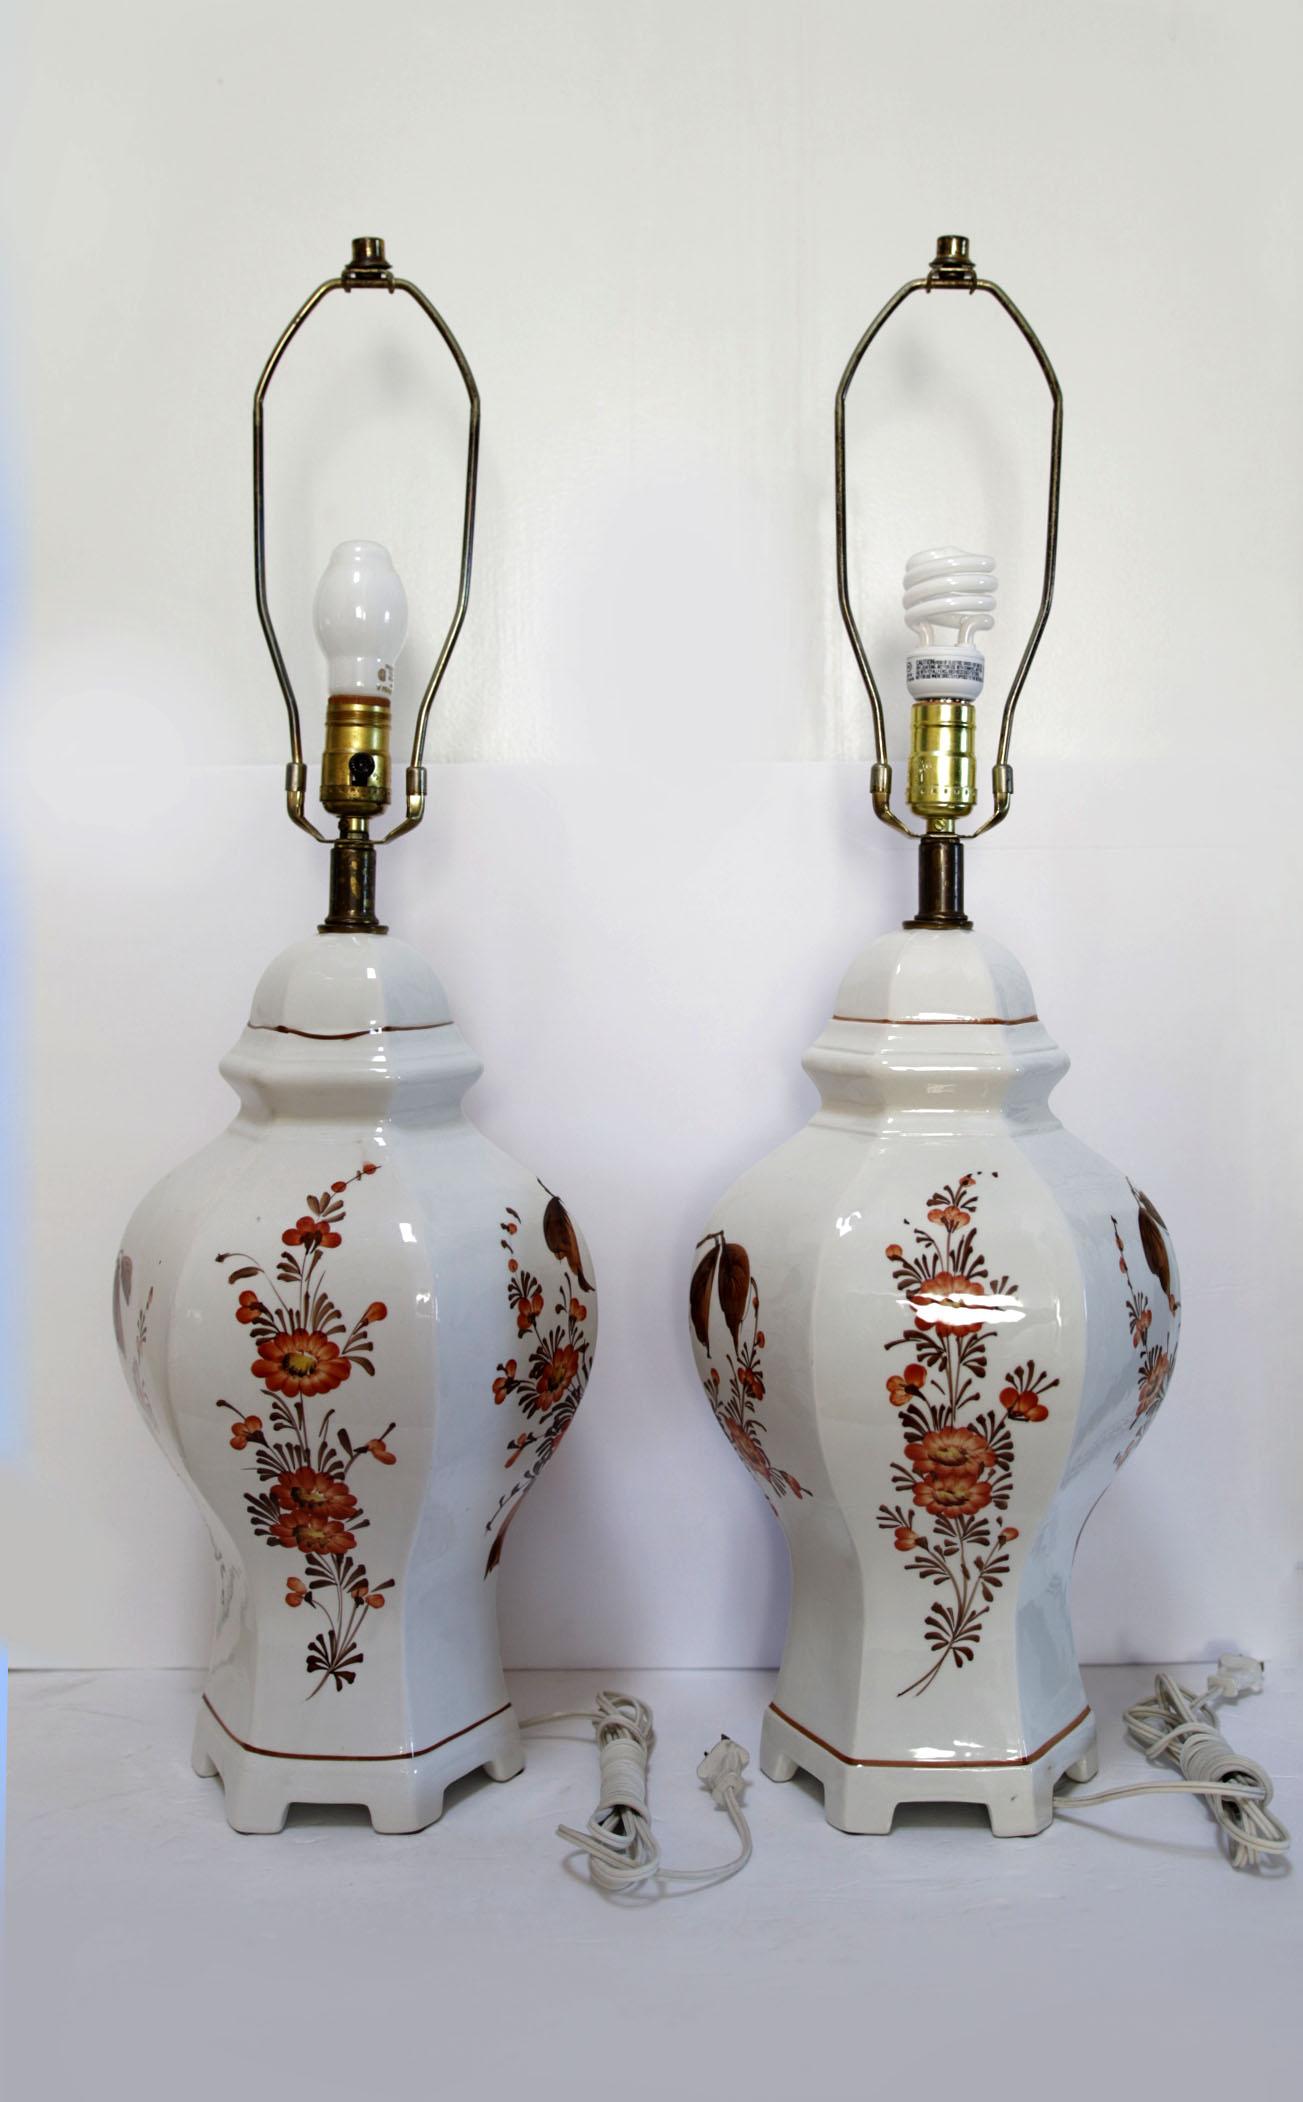 Pair of Signed Antonio Zen Hexagonal Lamps, Made in Italy For Sale 8